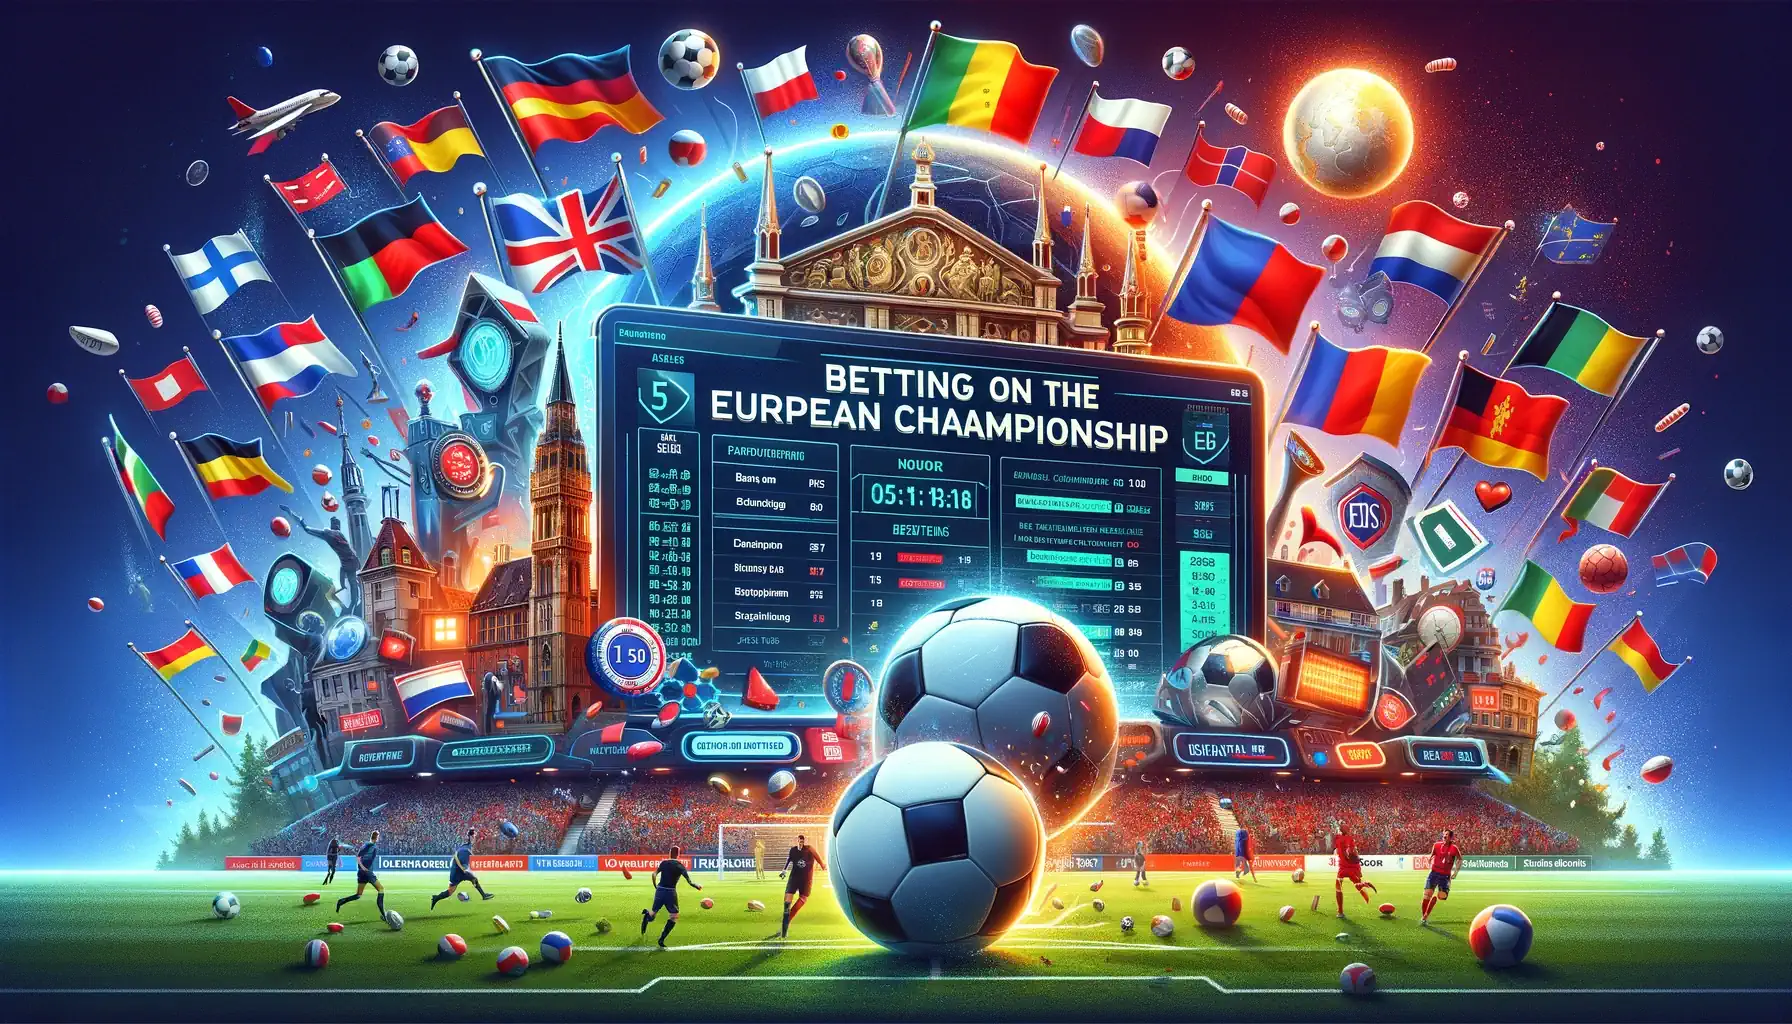 Betting on the European Championship